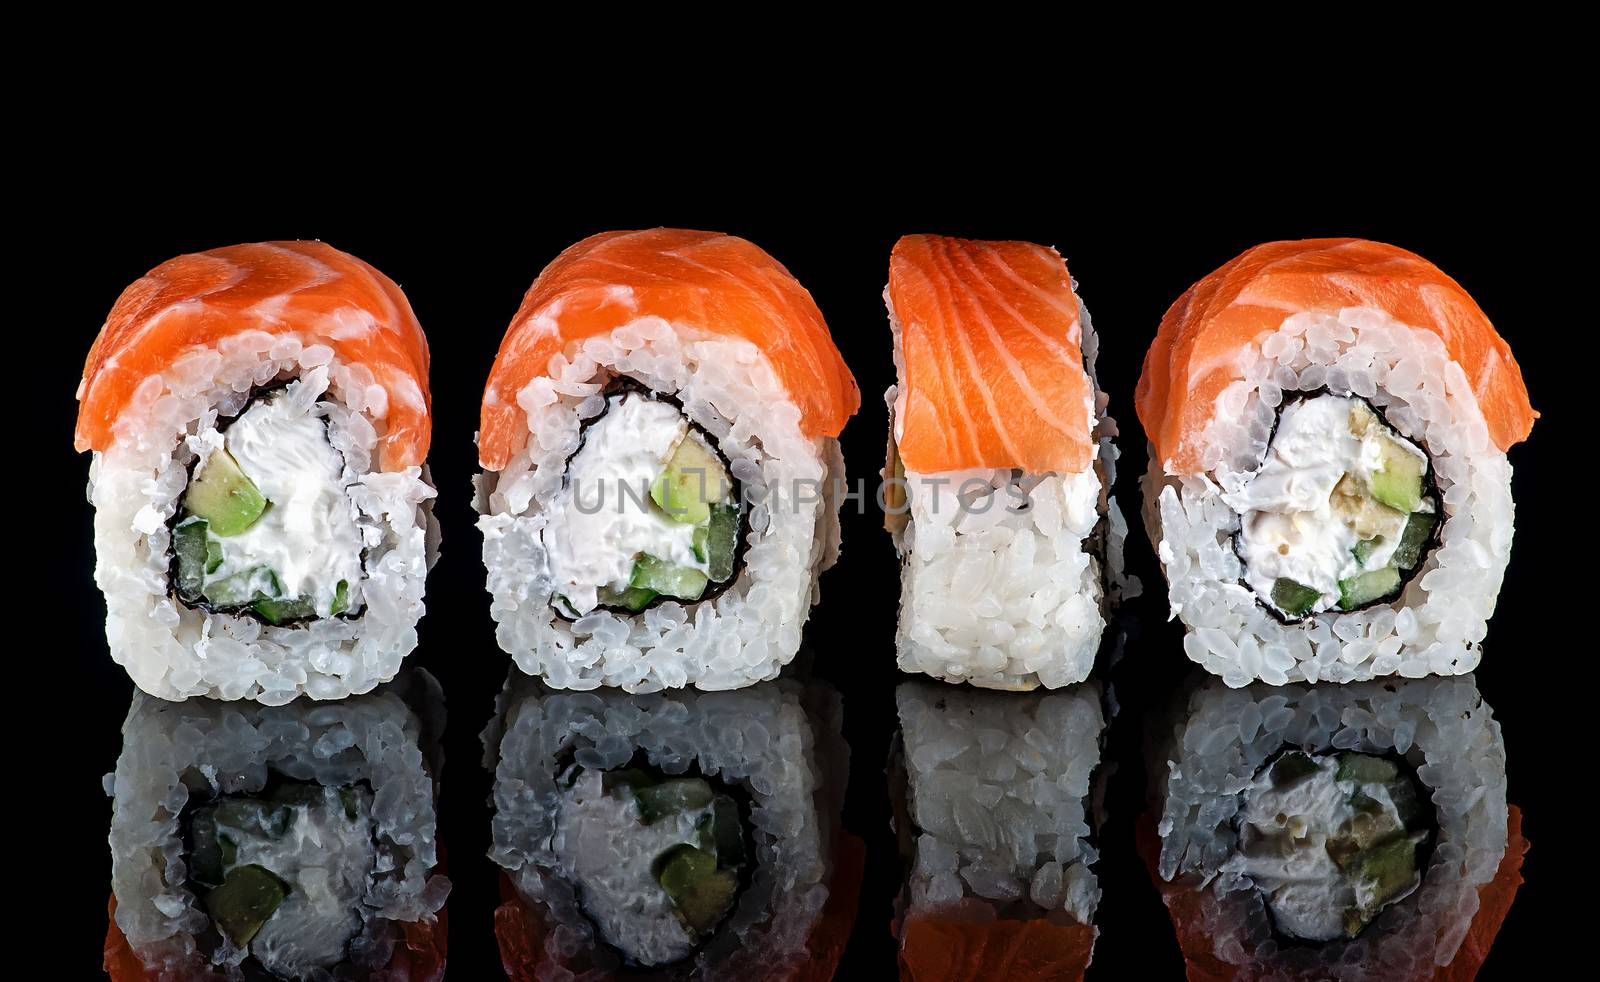 Traditional Japanese Sushi roll Philadelphia. Black background with reflection.